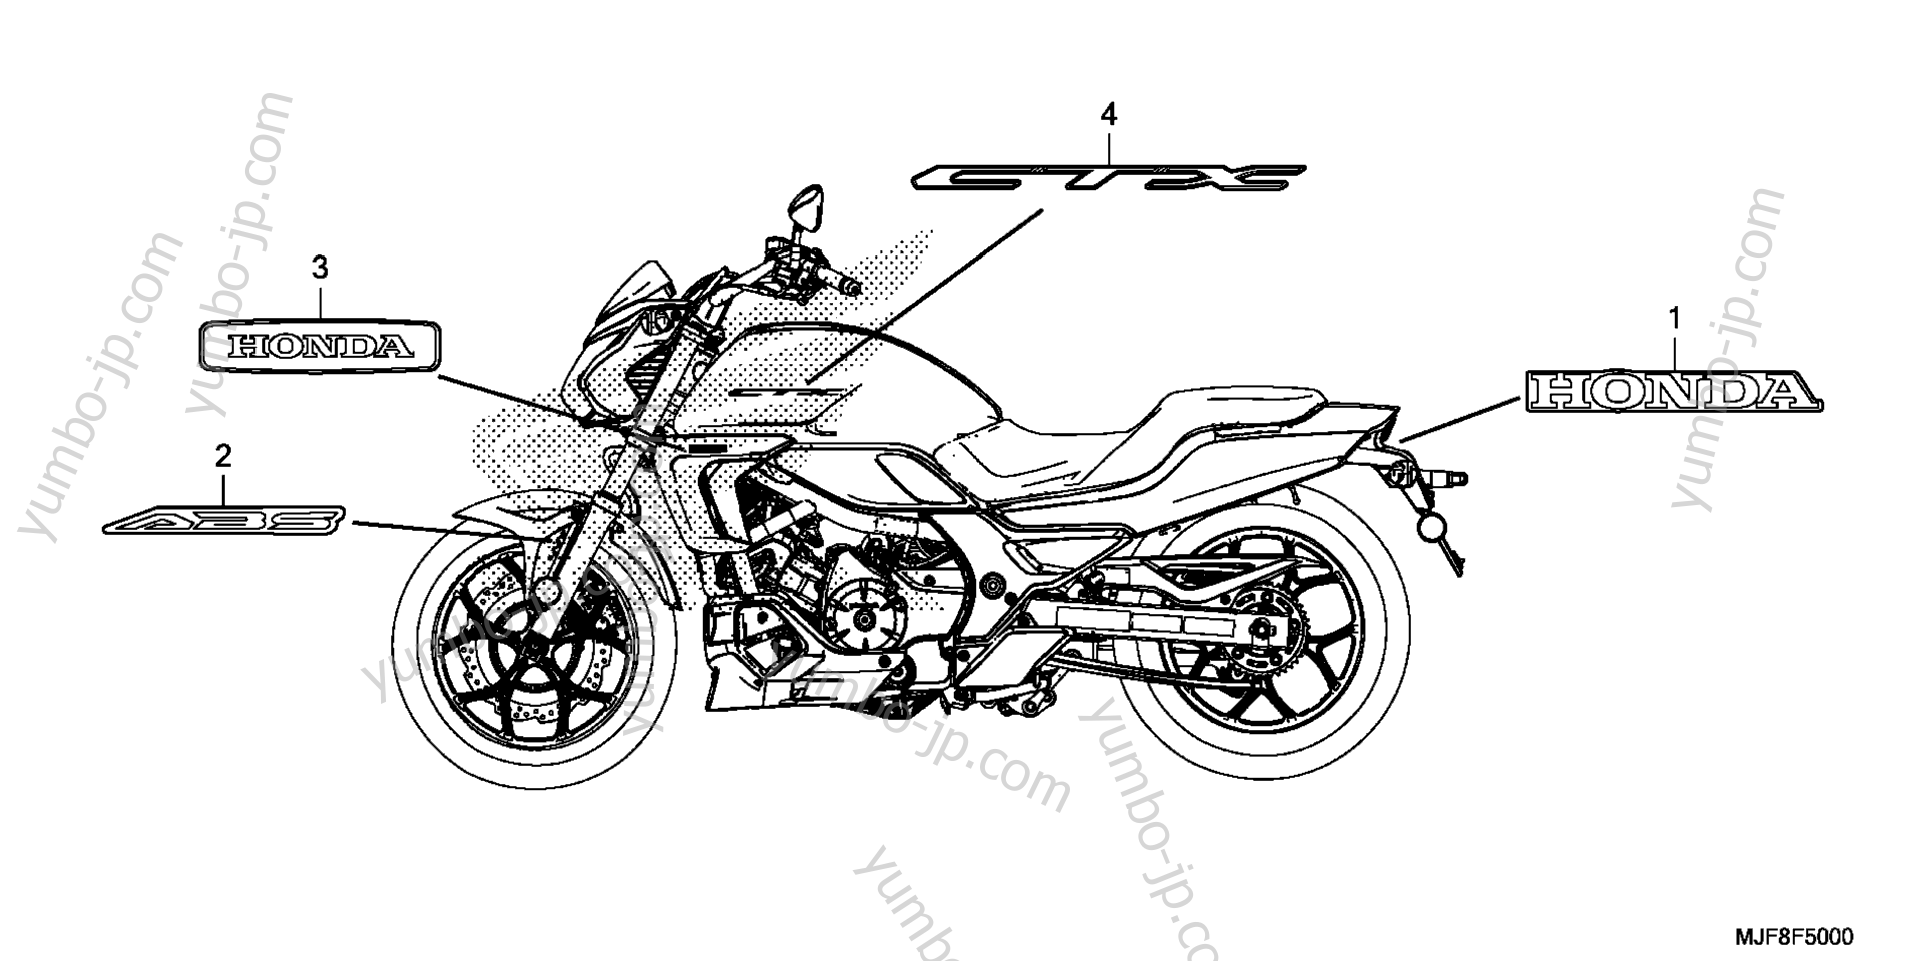 MARK / EMBLEM for motorcycles HONDA CTX700ND AC 2016 year